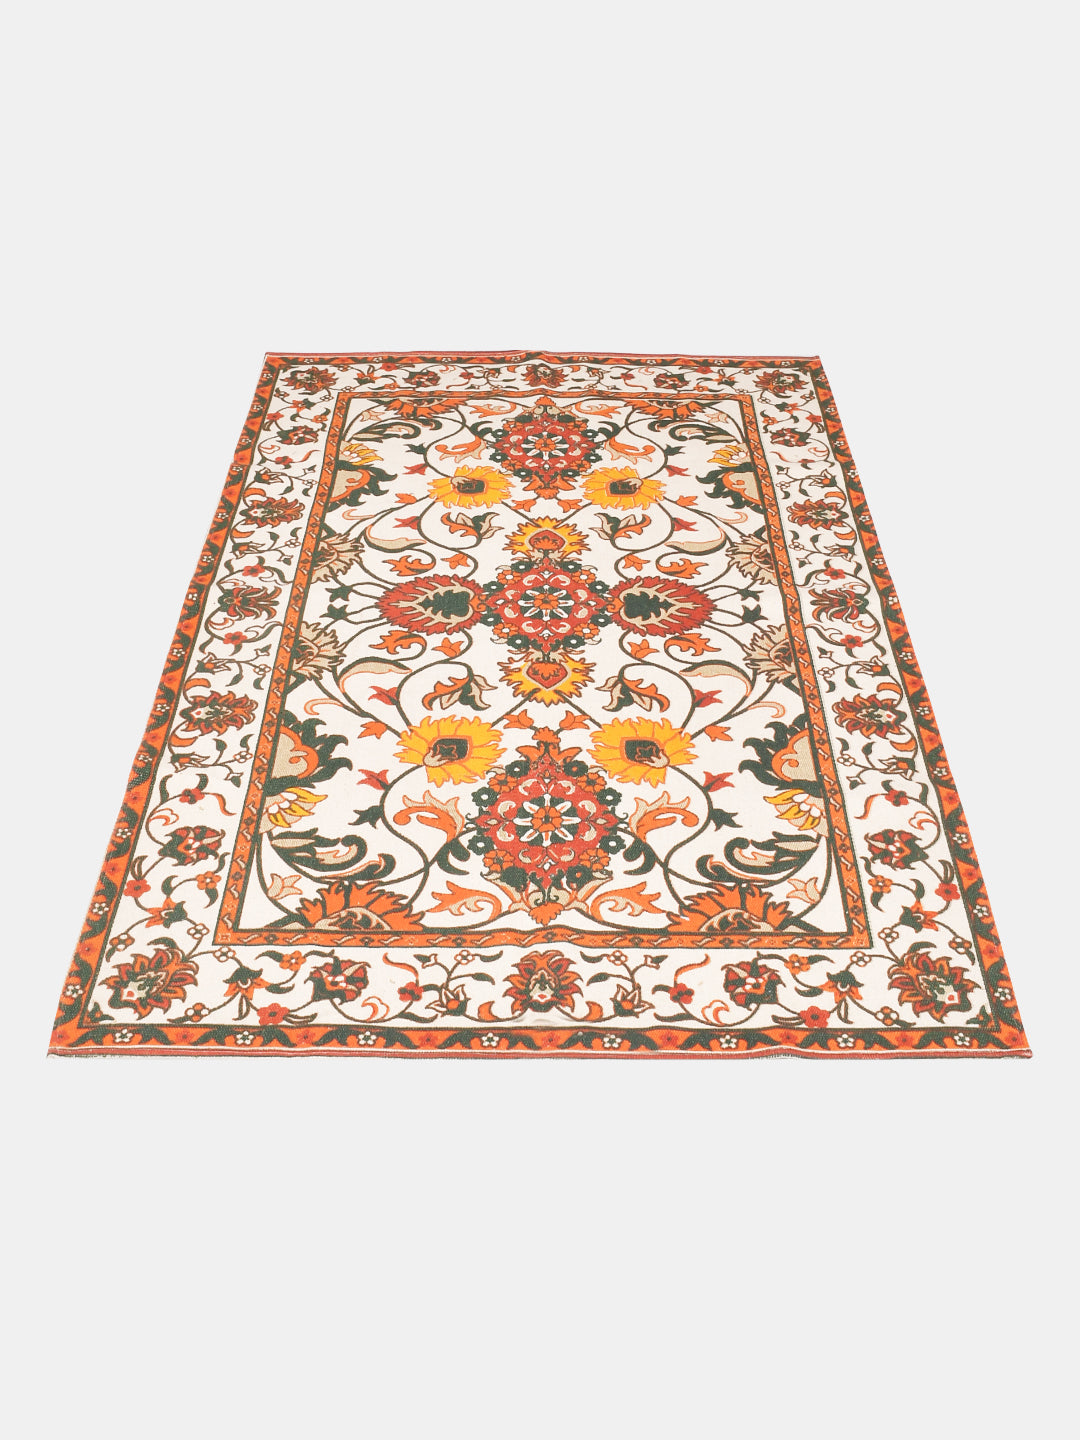 Blanc9 Jaisalmer Multicoloured Printed Cotton 4'x5.5' Carpet